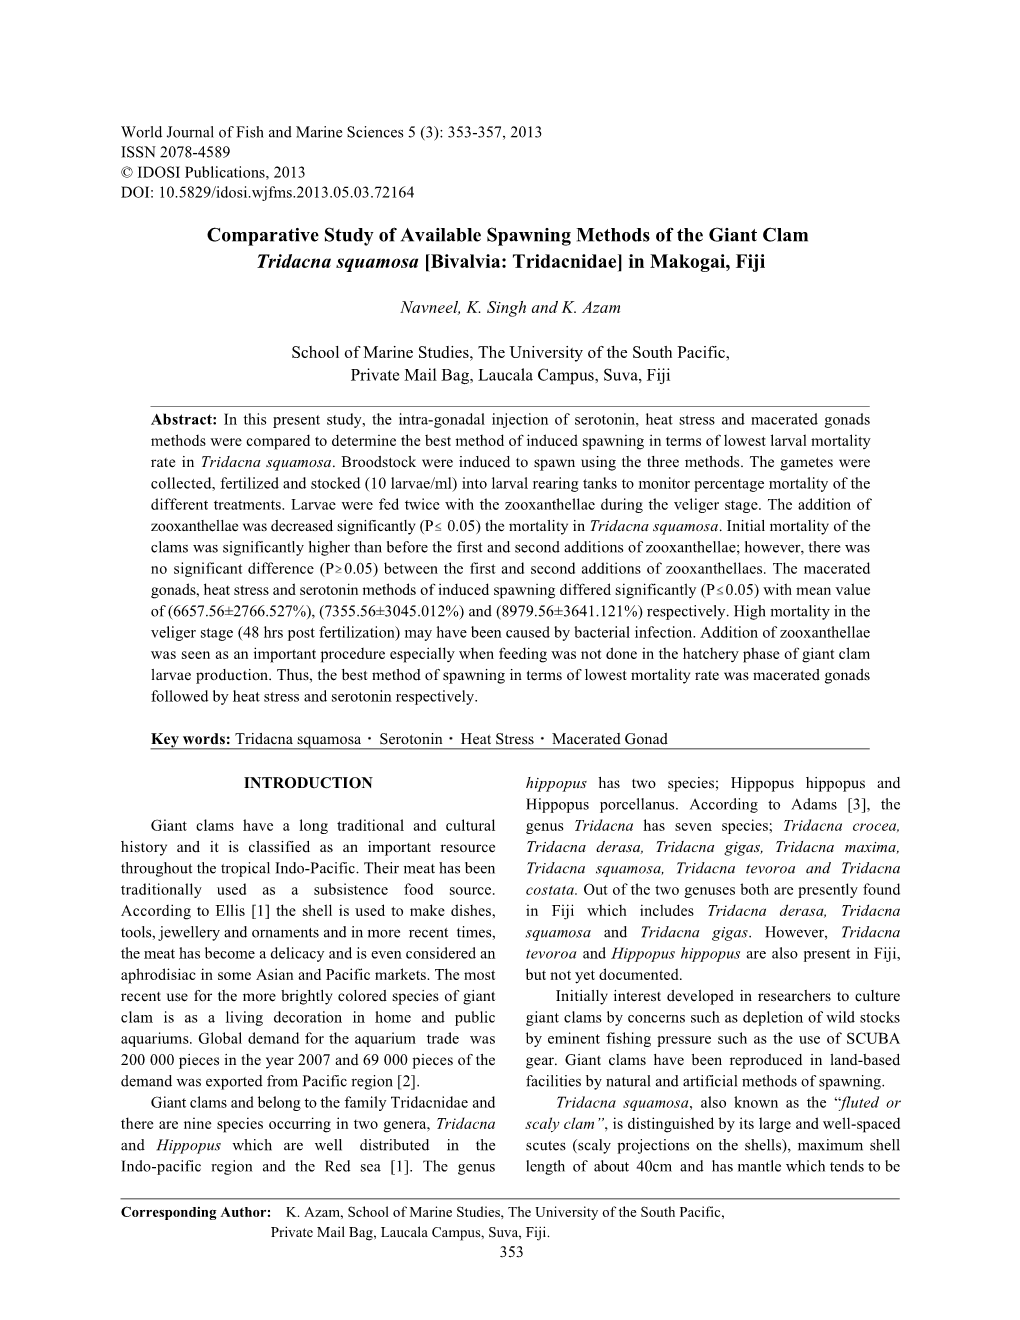 Comparative Study of Available Spawning Methods of the Giant Clam Tridacna Squamosa [Bivalvia: Tridacnidae] in Makogai, Fiji